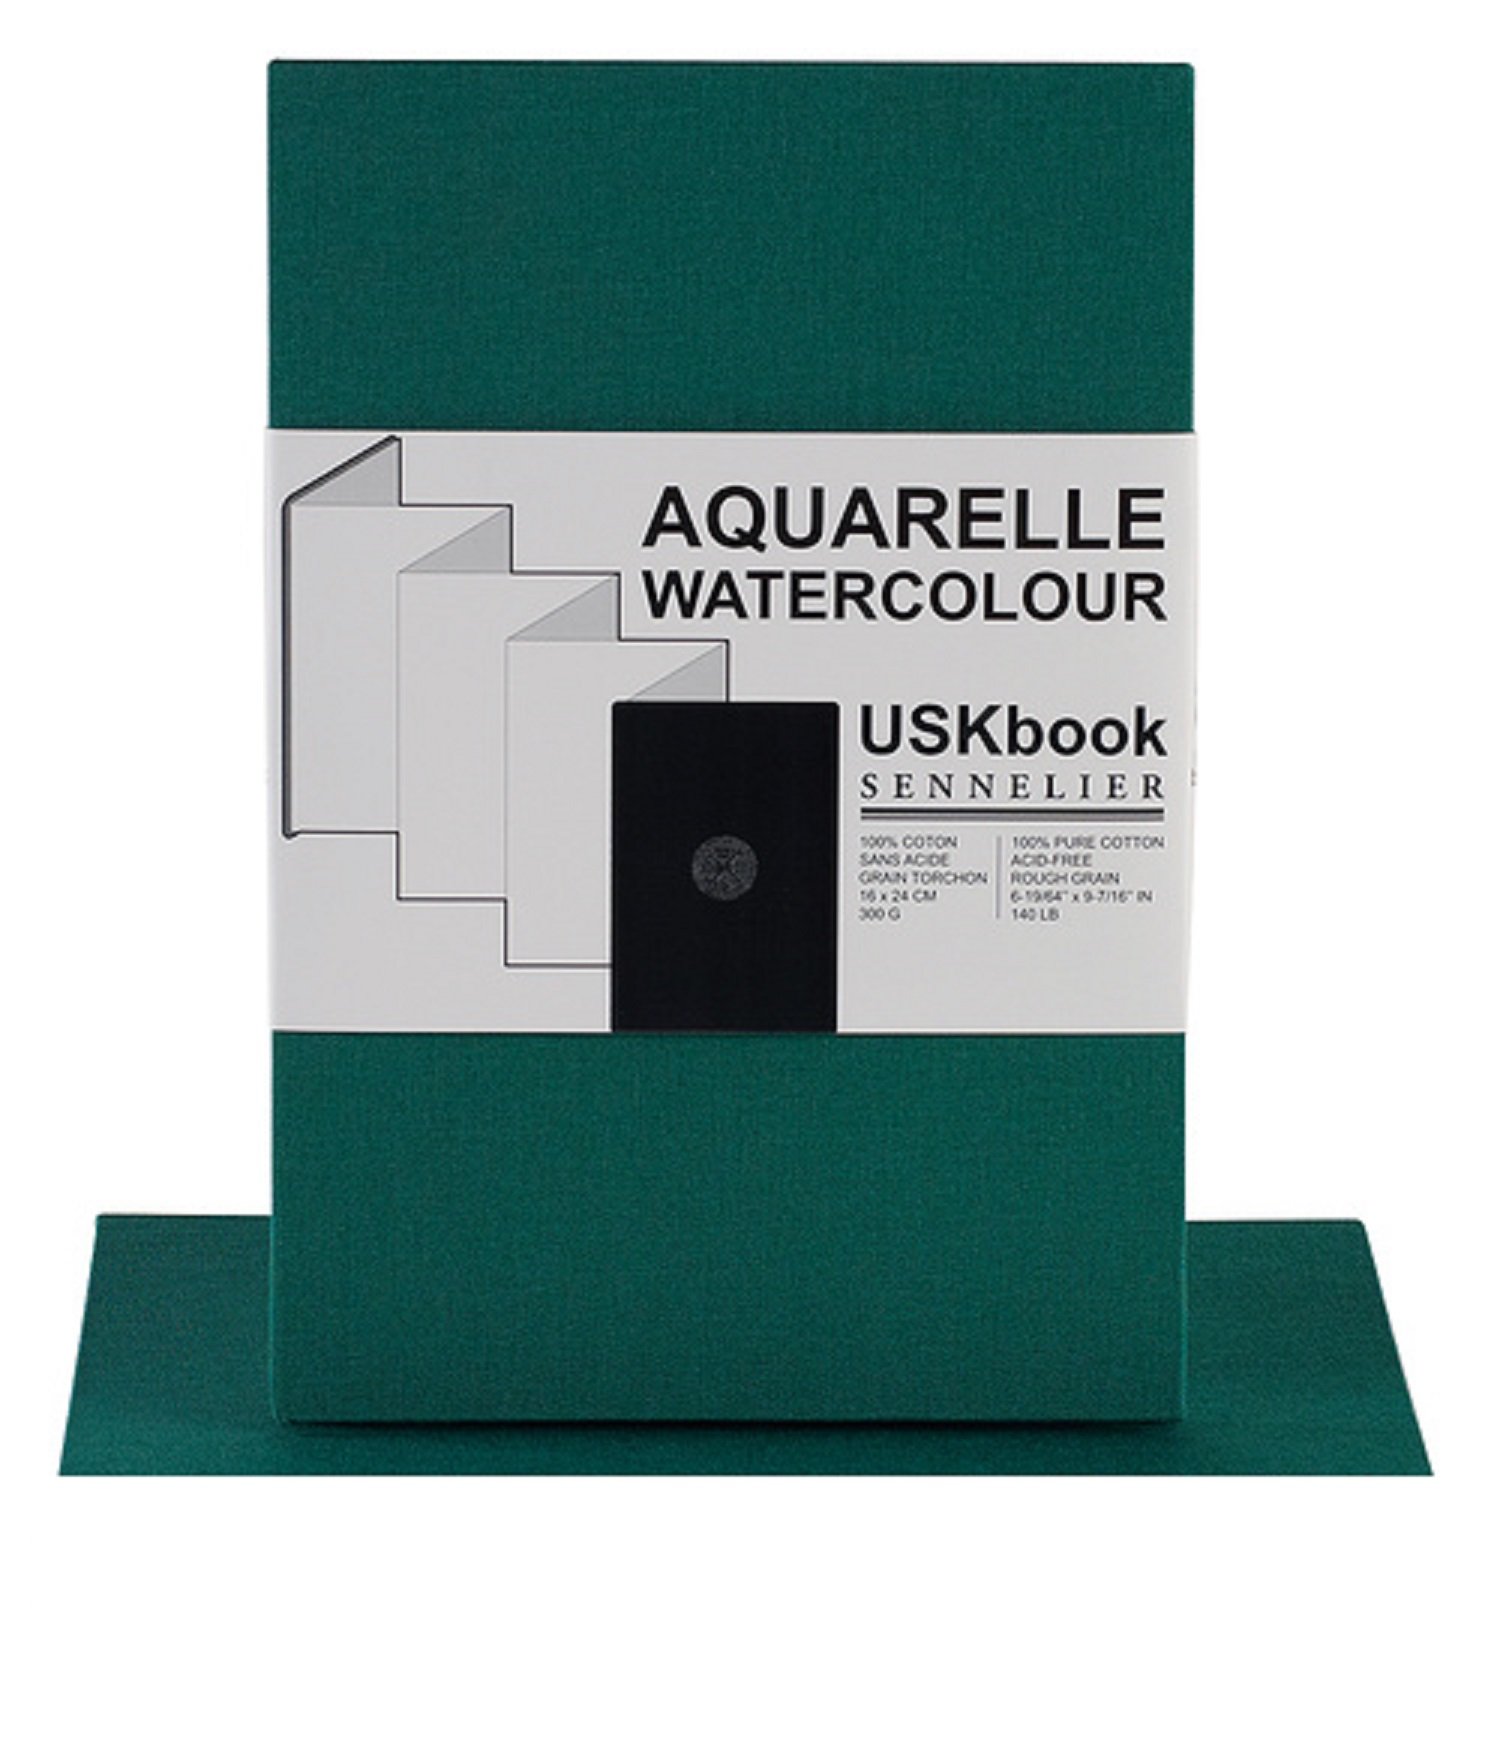 Sennelier USKbook - Aquarellbuch Hardcover Ziehharmonika - grünes Leineneinband - grobe Körnung - 300 GSM - 16 x 24 cm